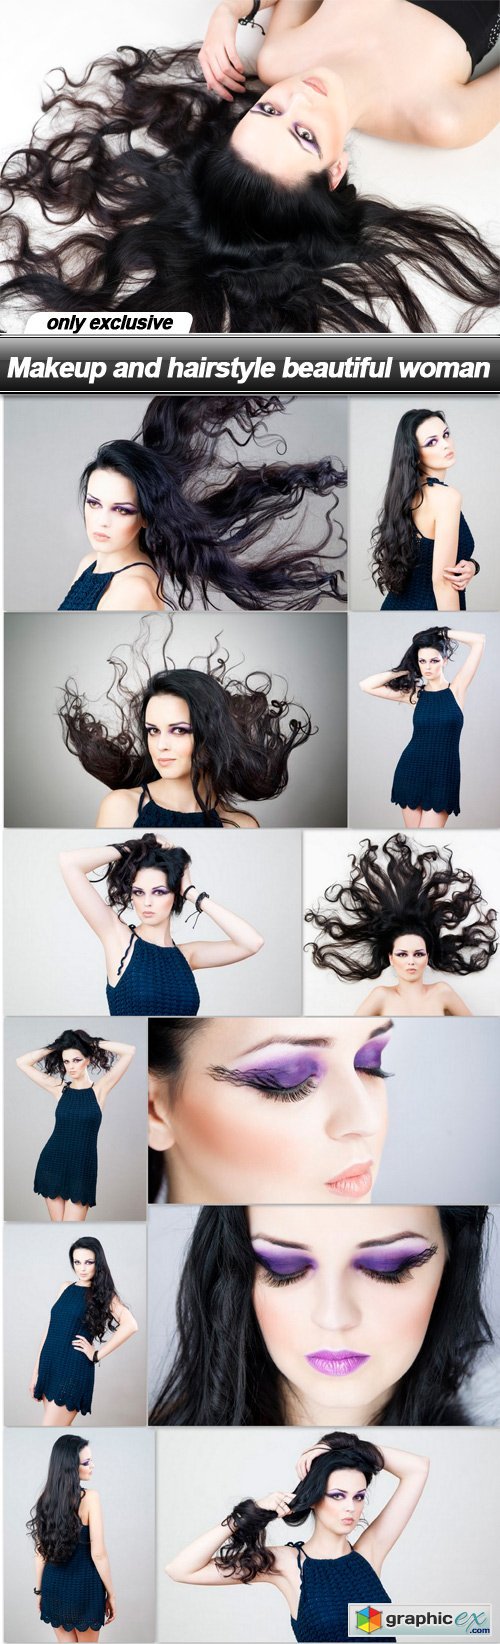 Makeup and hairstyle beautiful woman - 13 UHQ JPEG